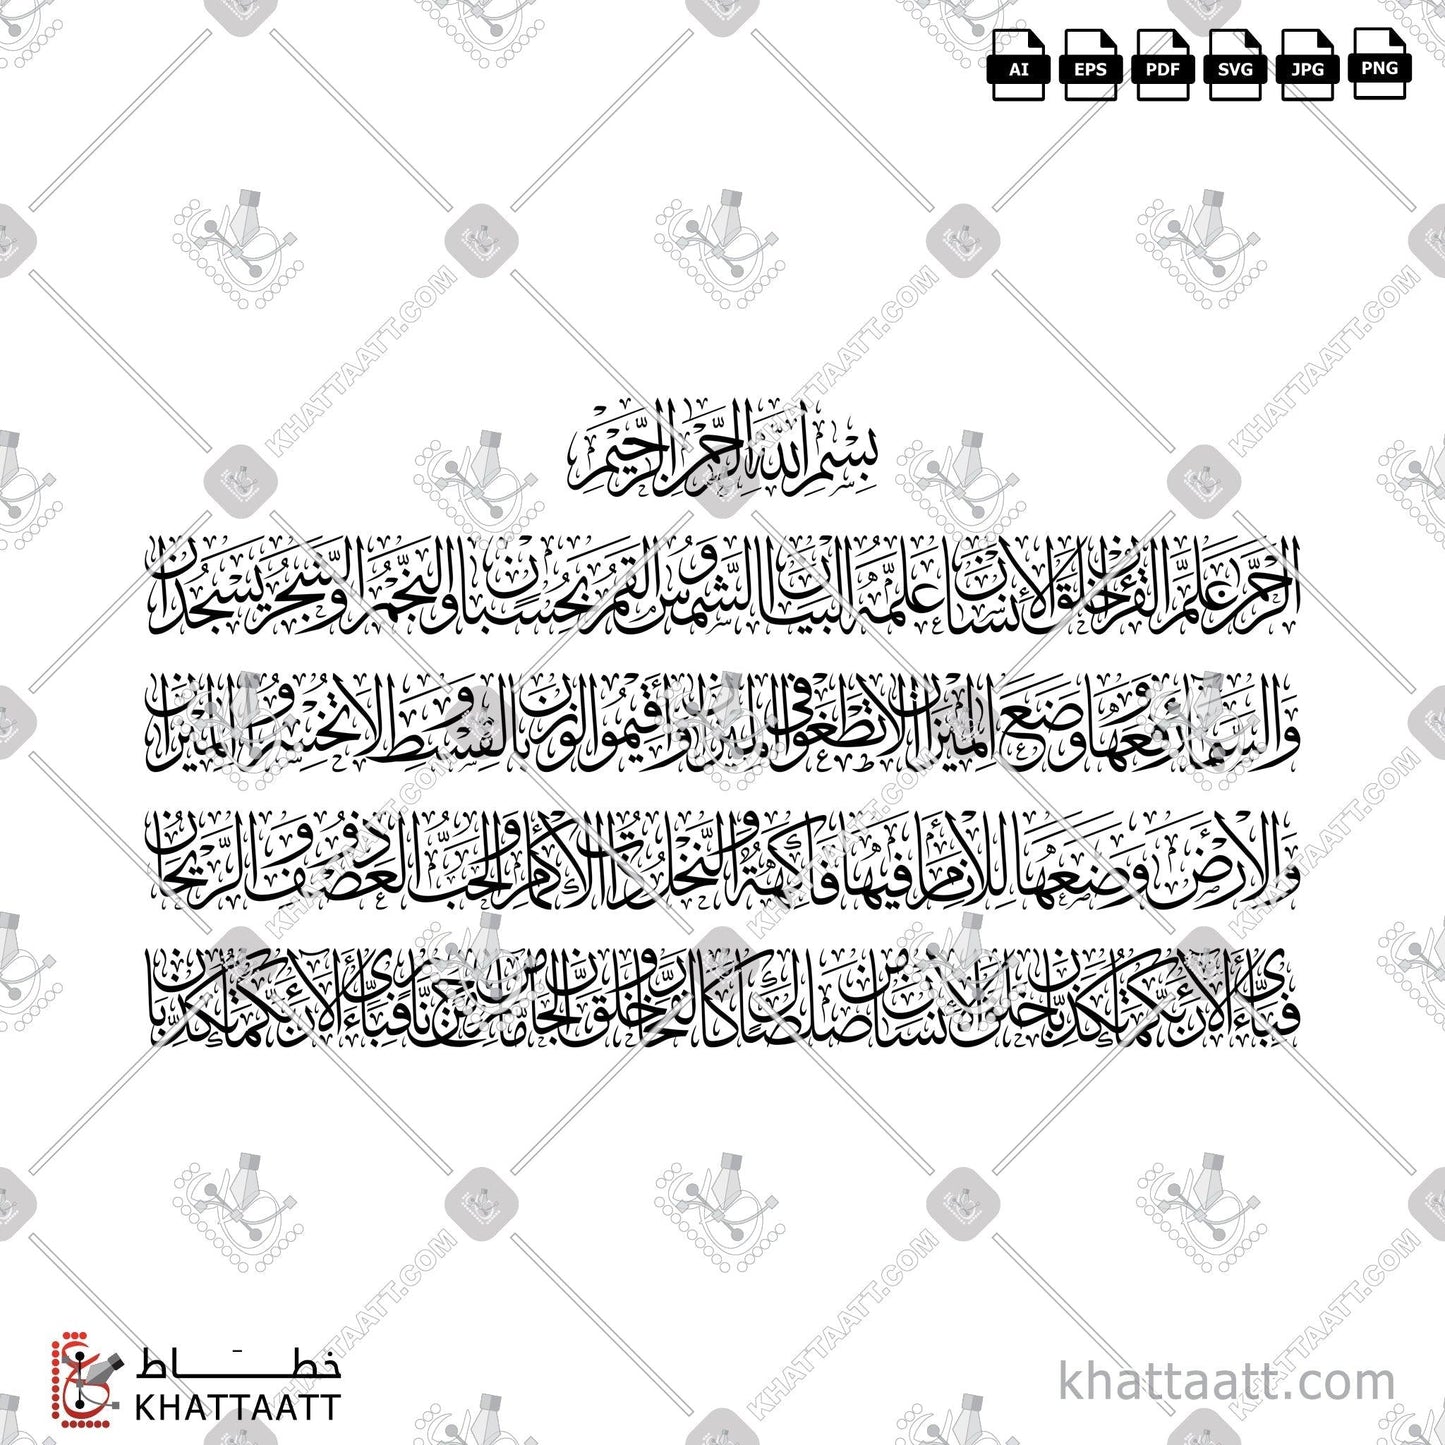 Download Arabic Calligraphy of Surat Ar-Rahmaan - سورة الرحمن in Thuluth - خط الثلث in vector and .png